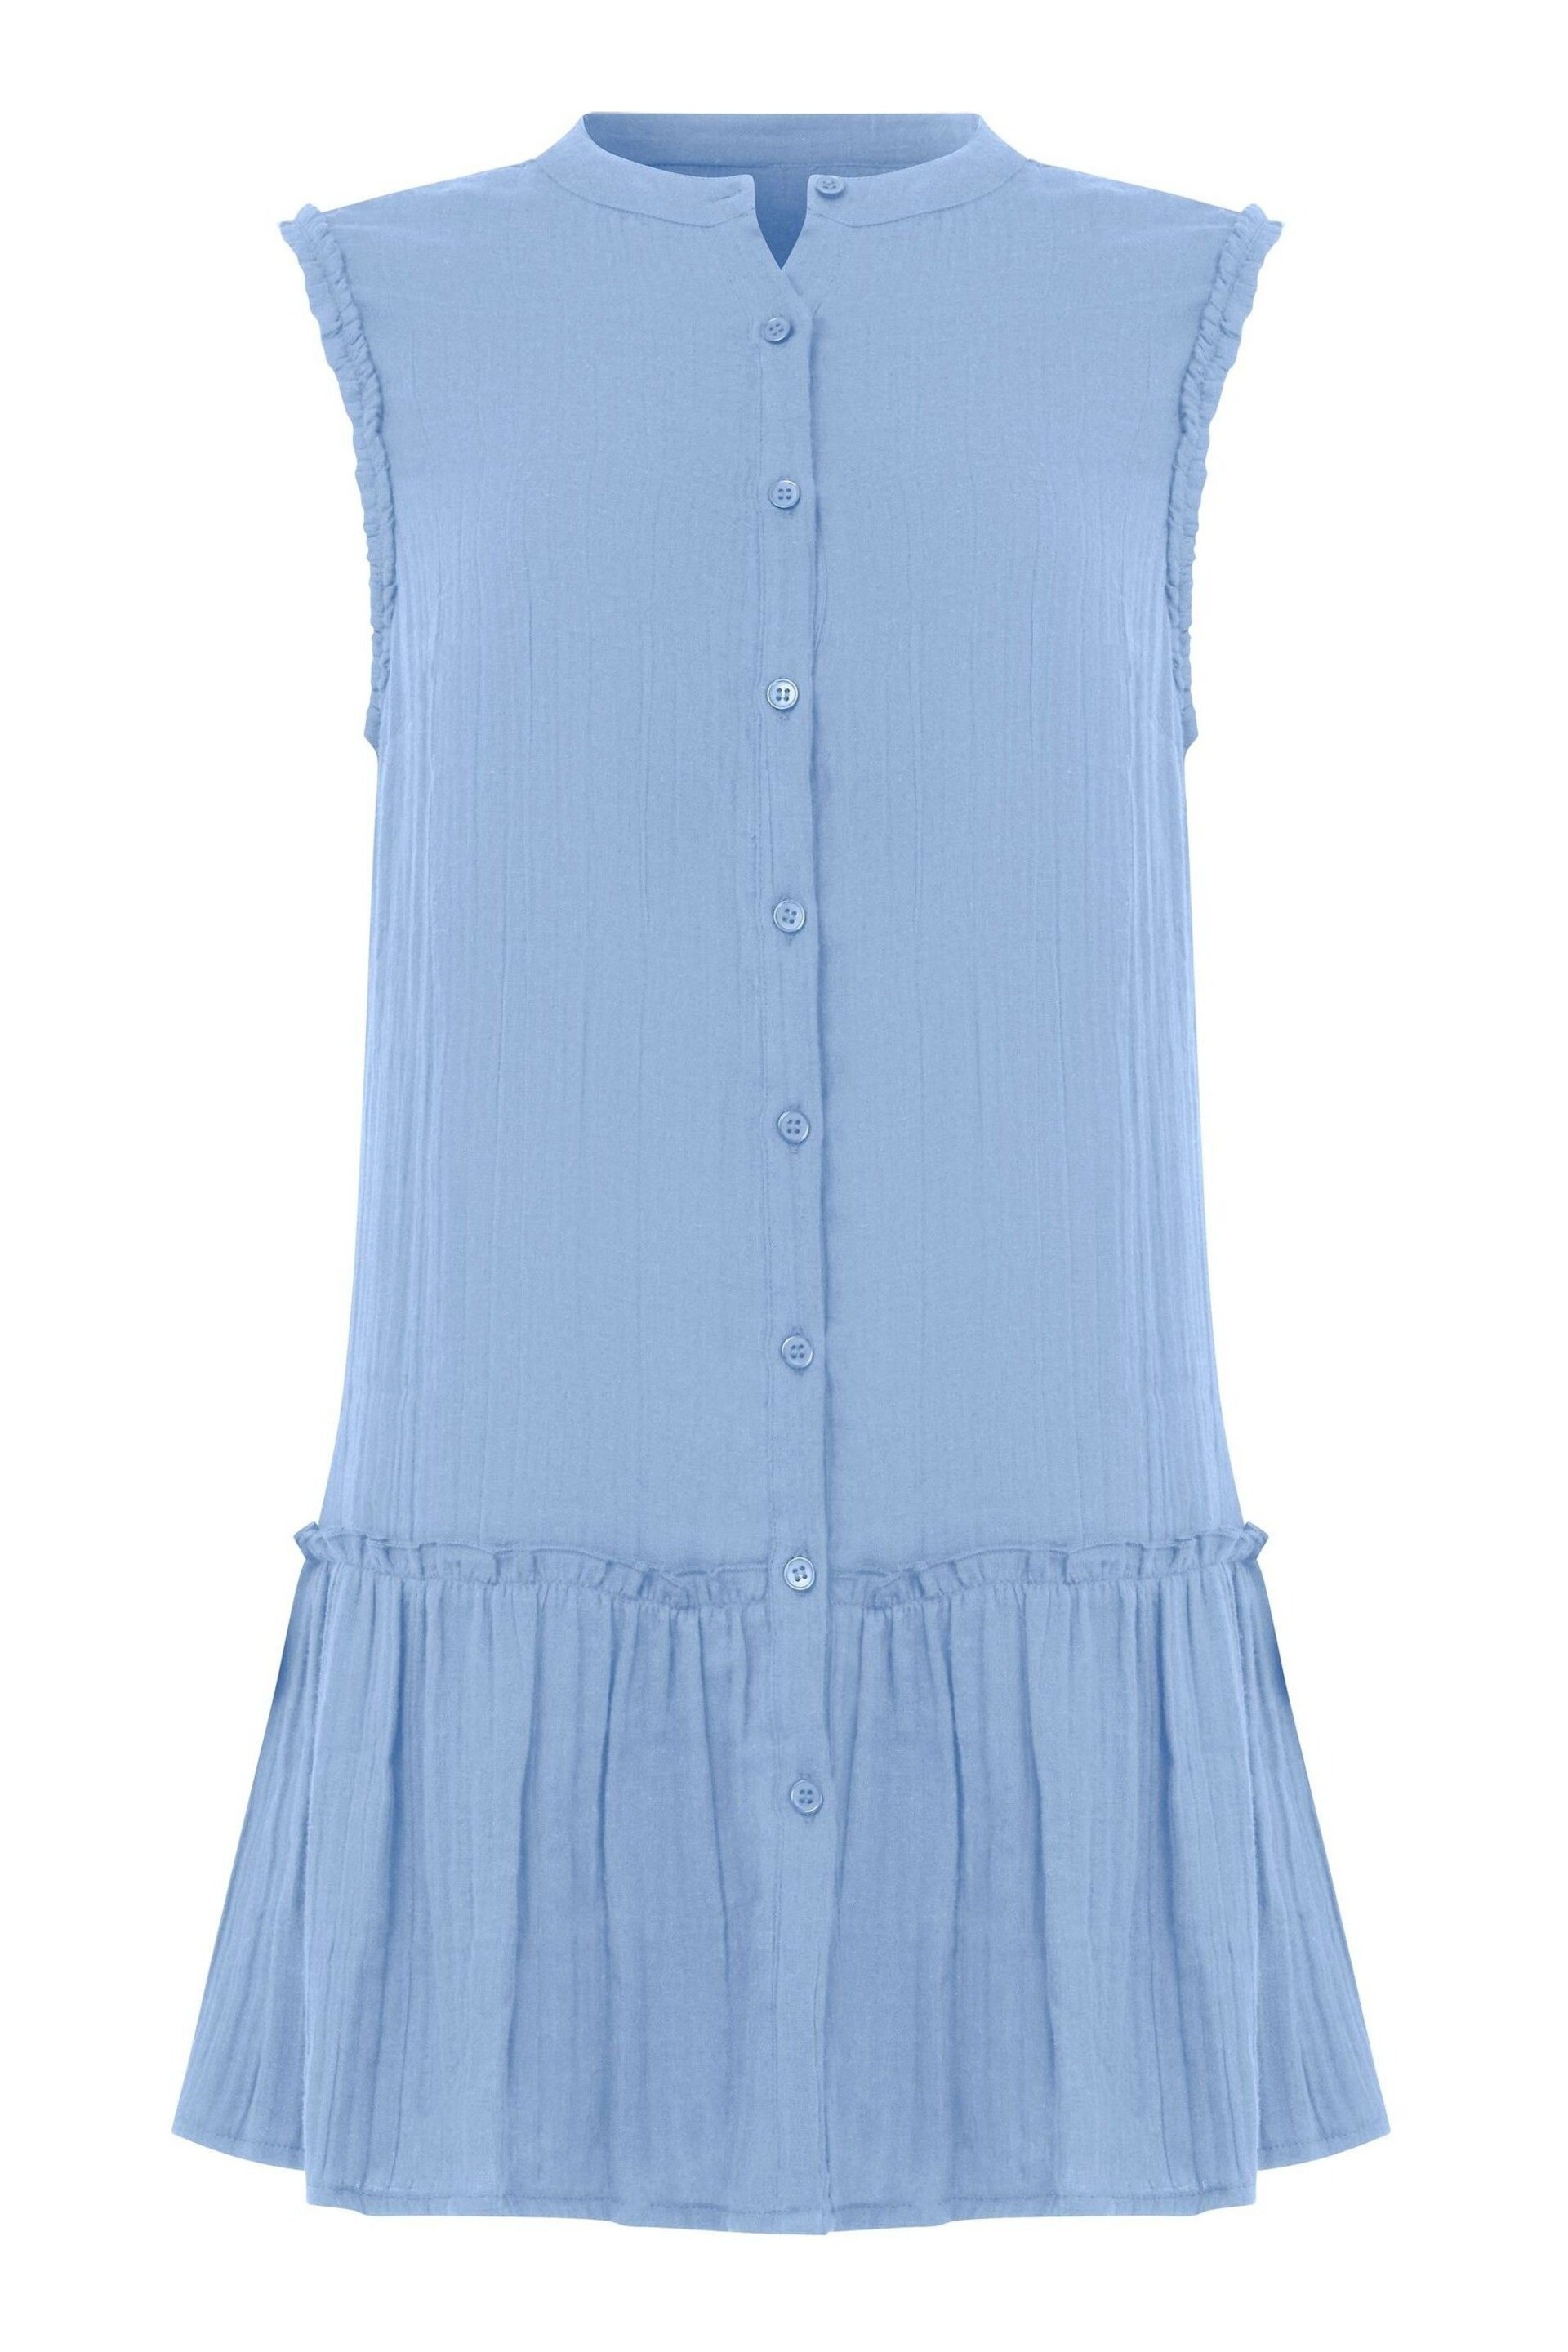 Joe Browns Blue Basic Sleeveless Frilly Cotton Tunic - Image 5 of 5